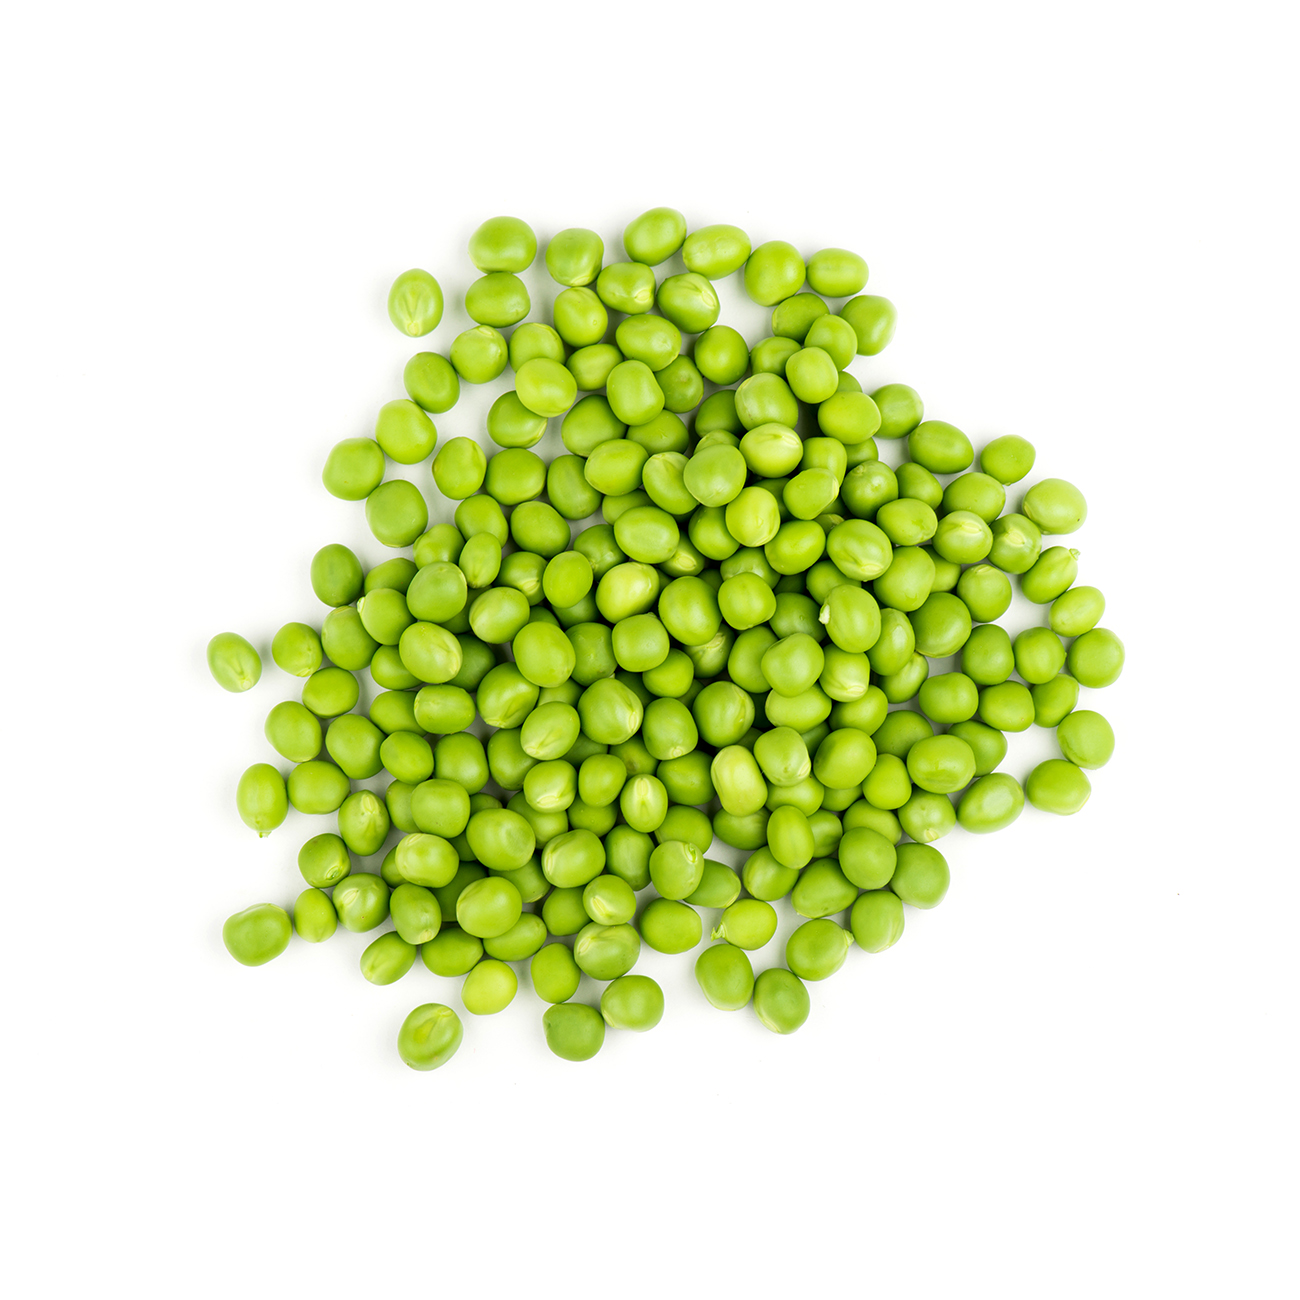 Peas, green